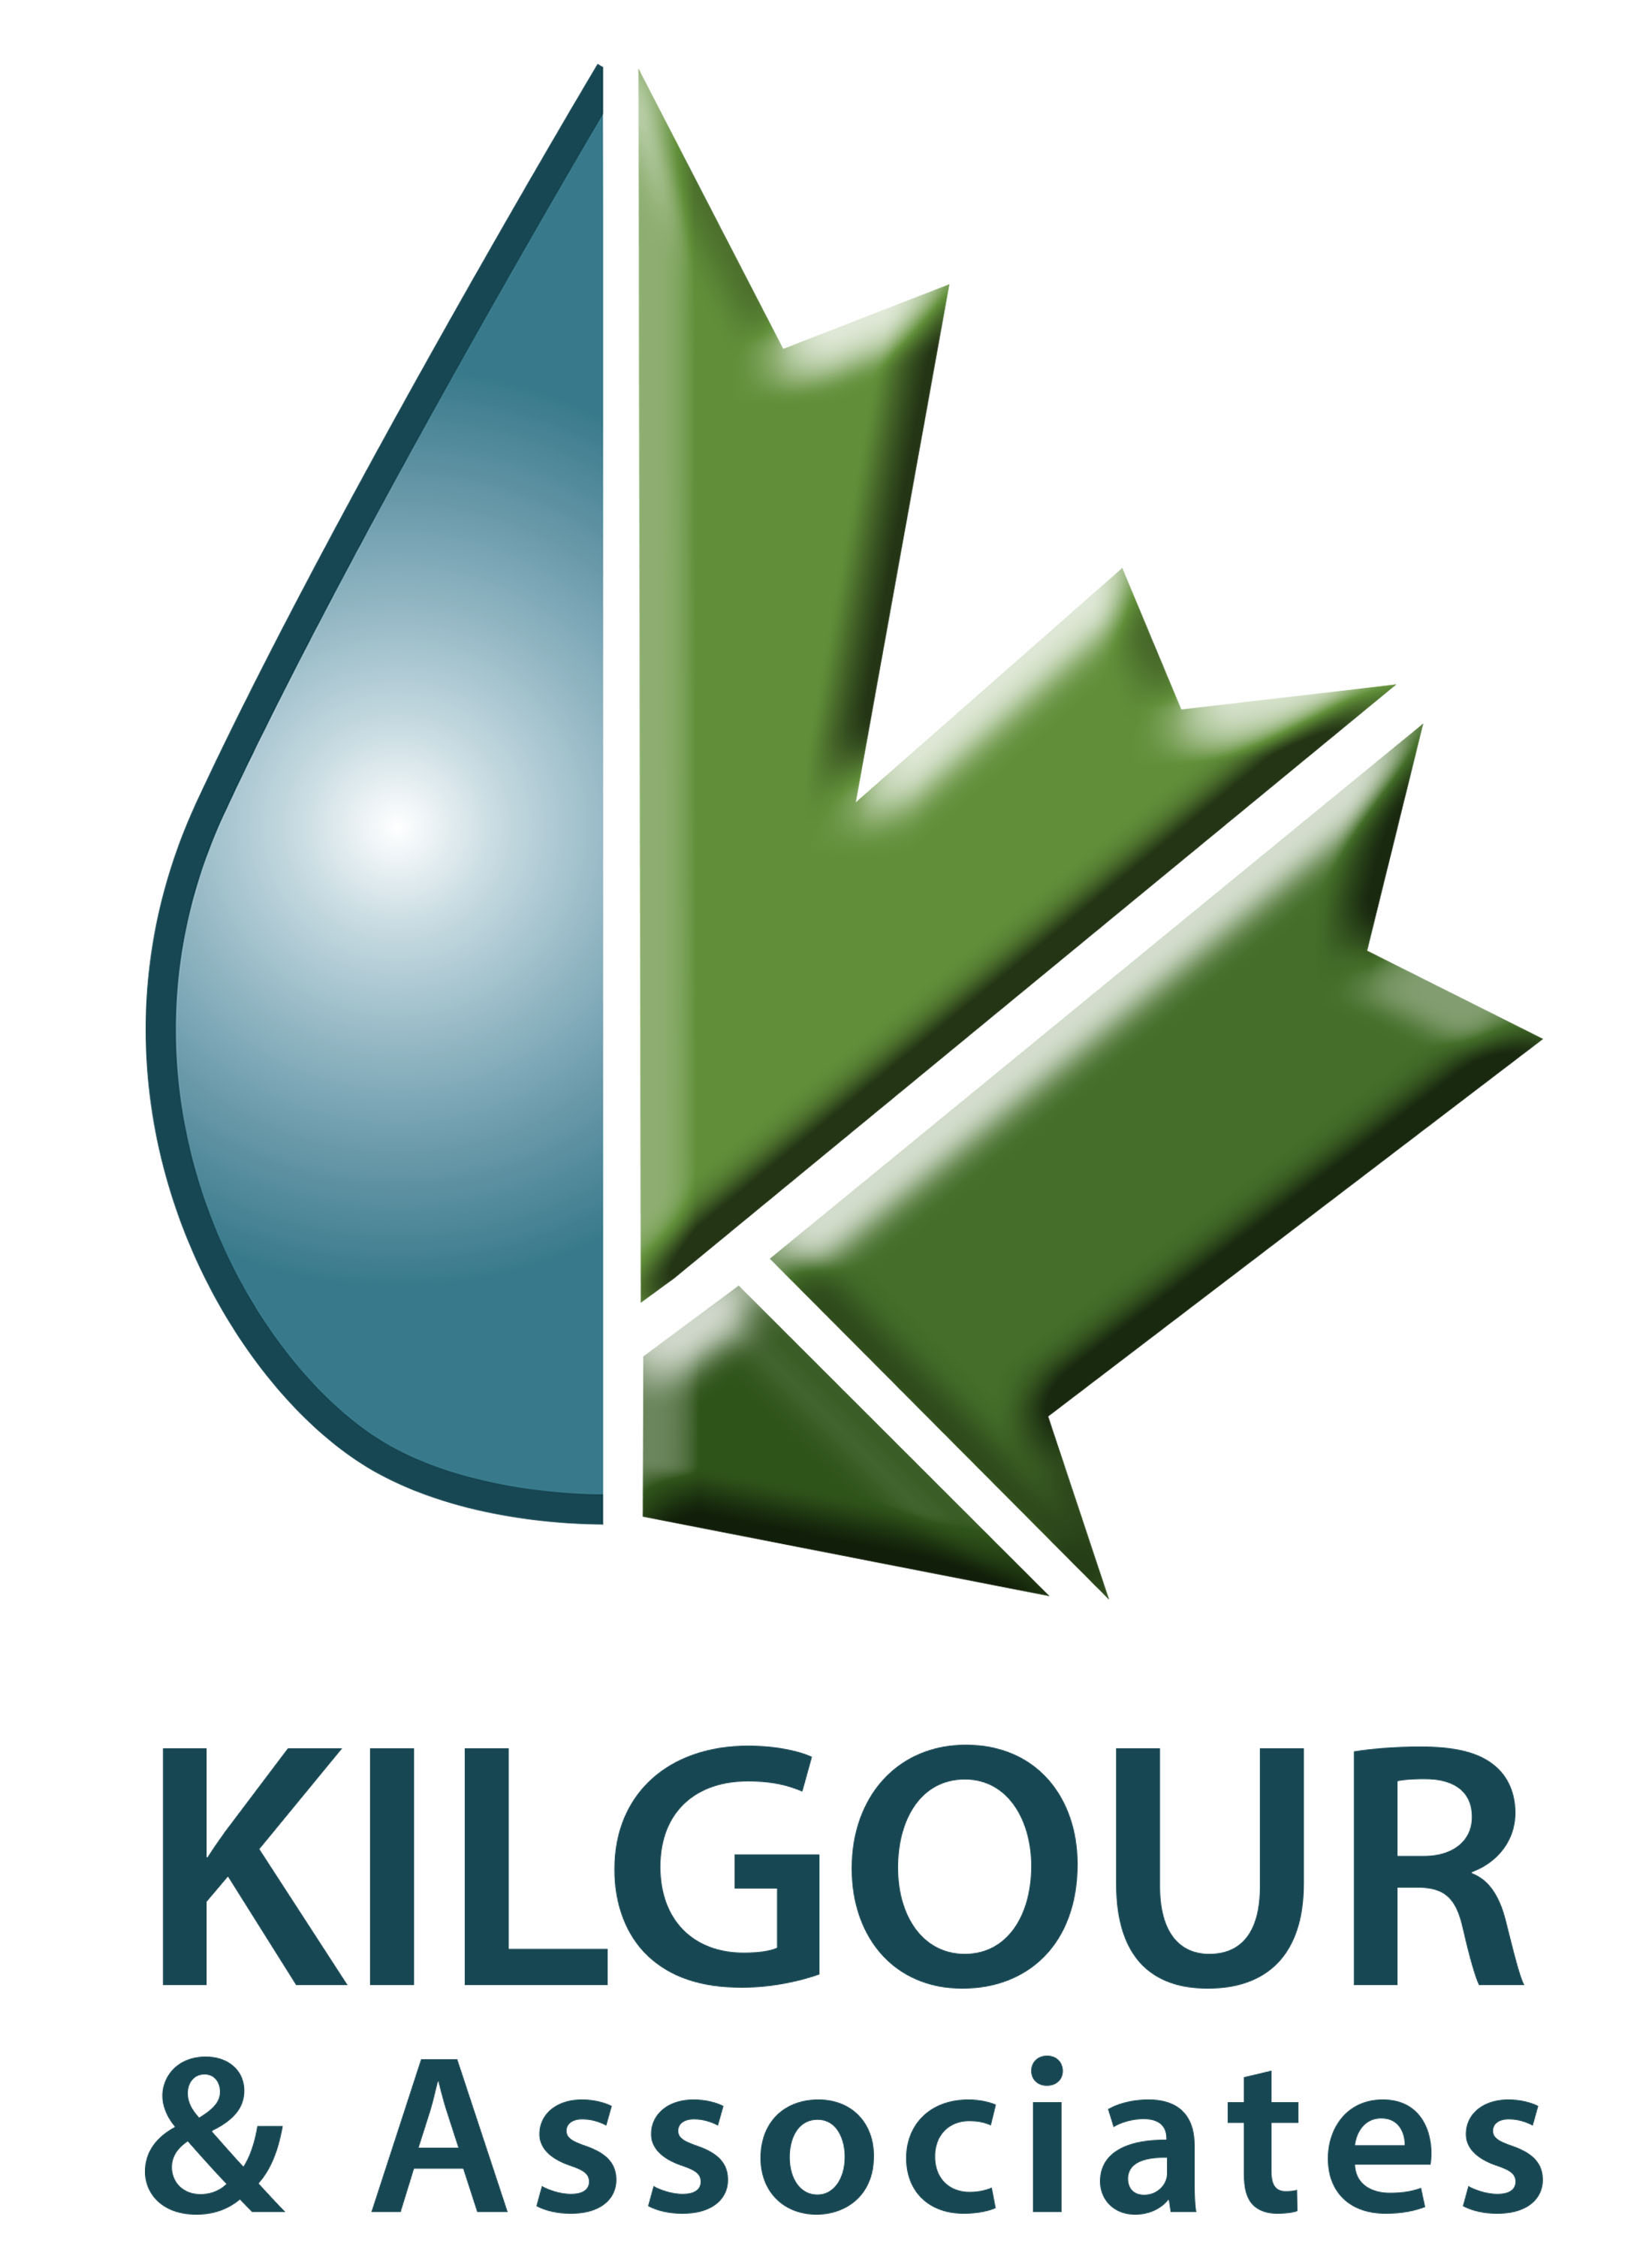 Kilgour & Associates Ltd.